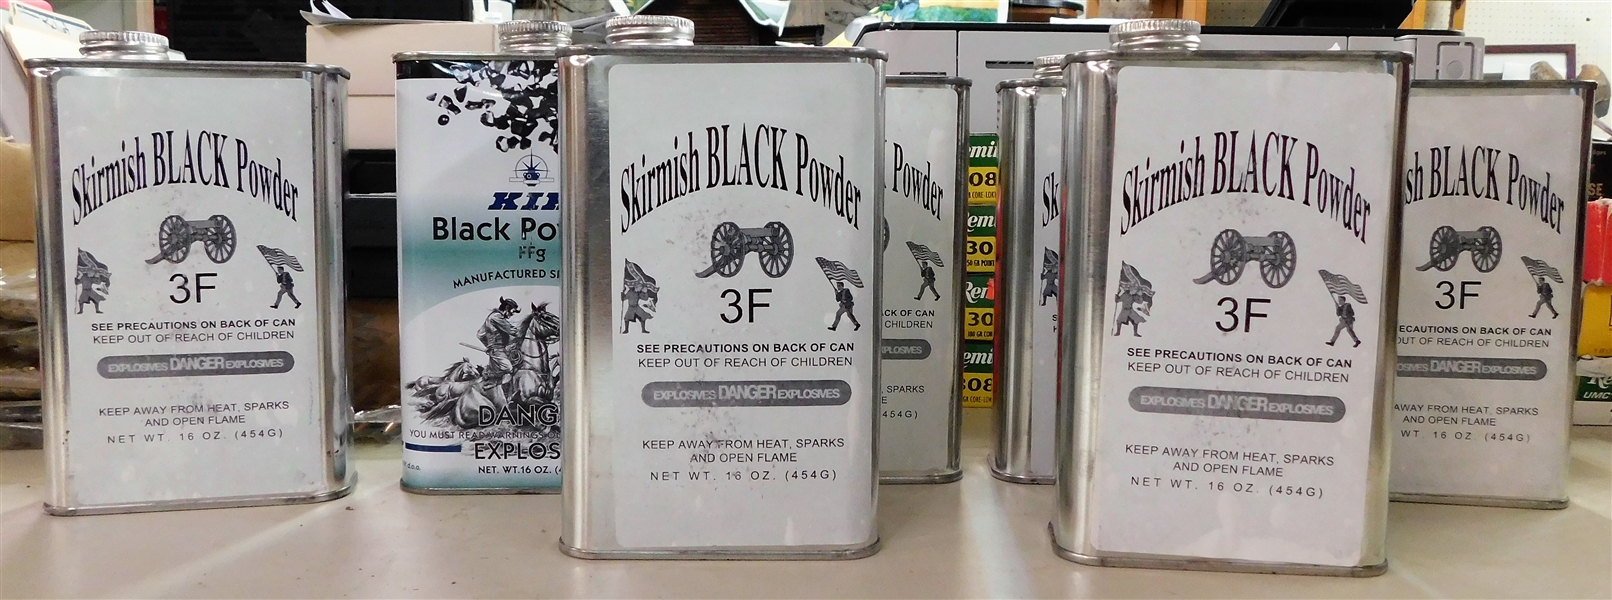 7 New Cans of Skirmish Black Powder - 3F